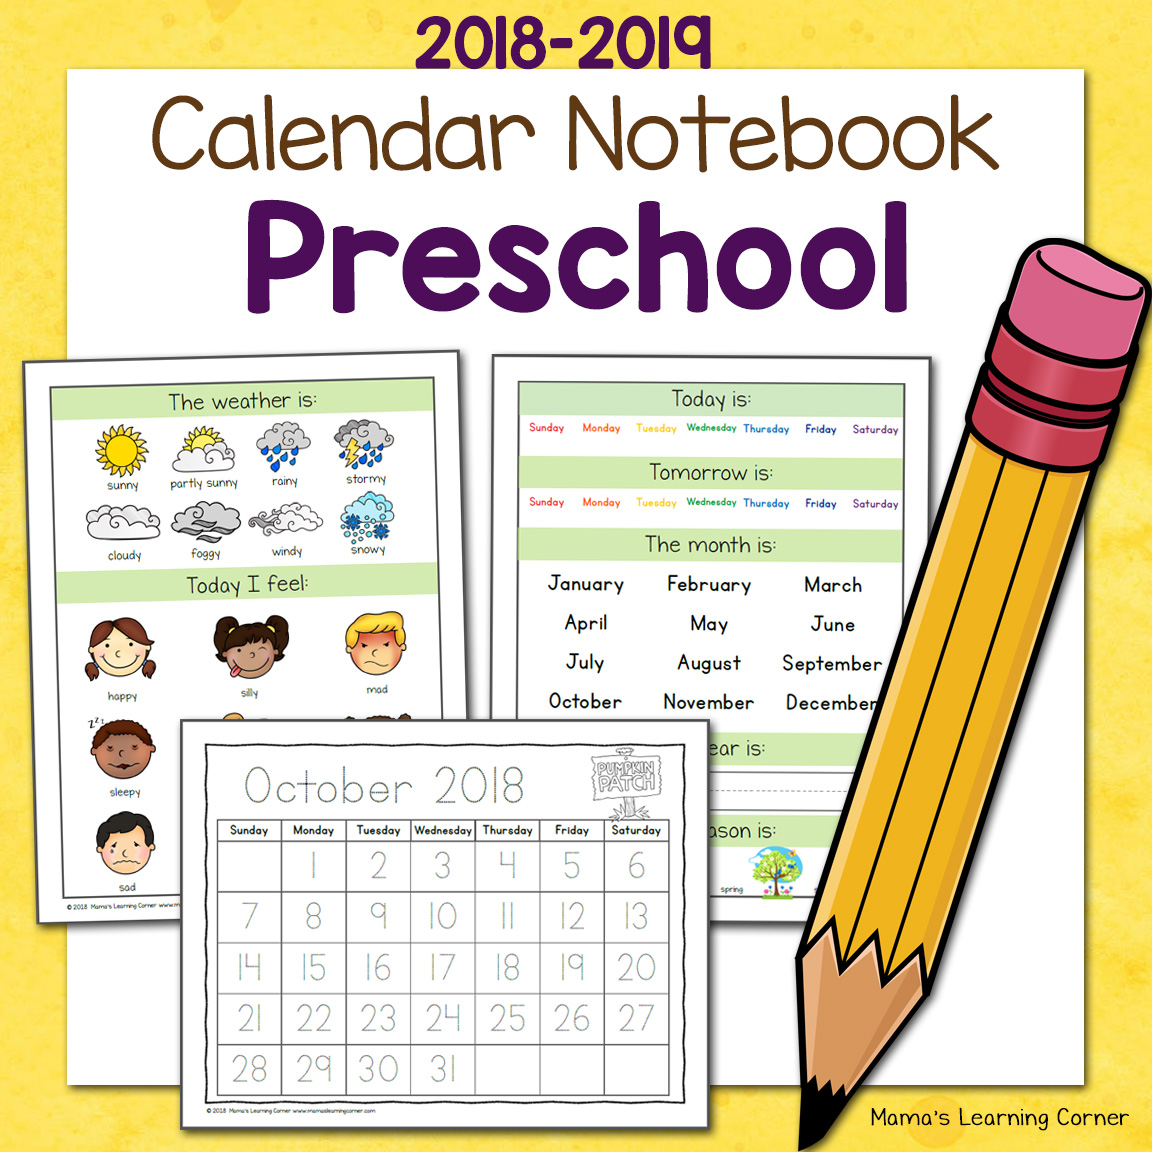 Preschool Calendar Notebook 2018-2019 - Mamas Learning Corner